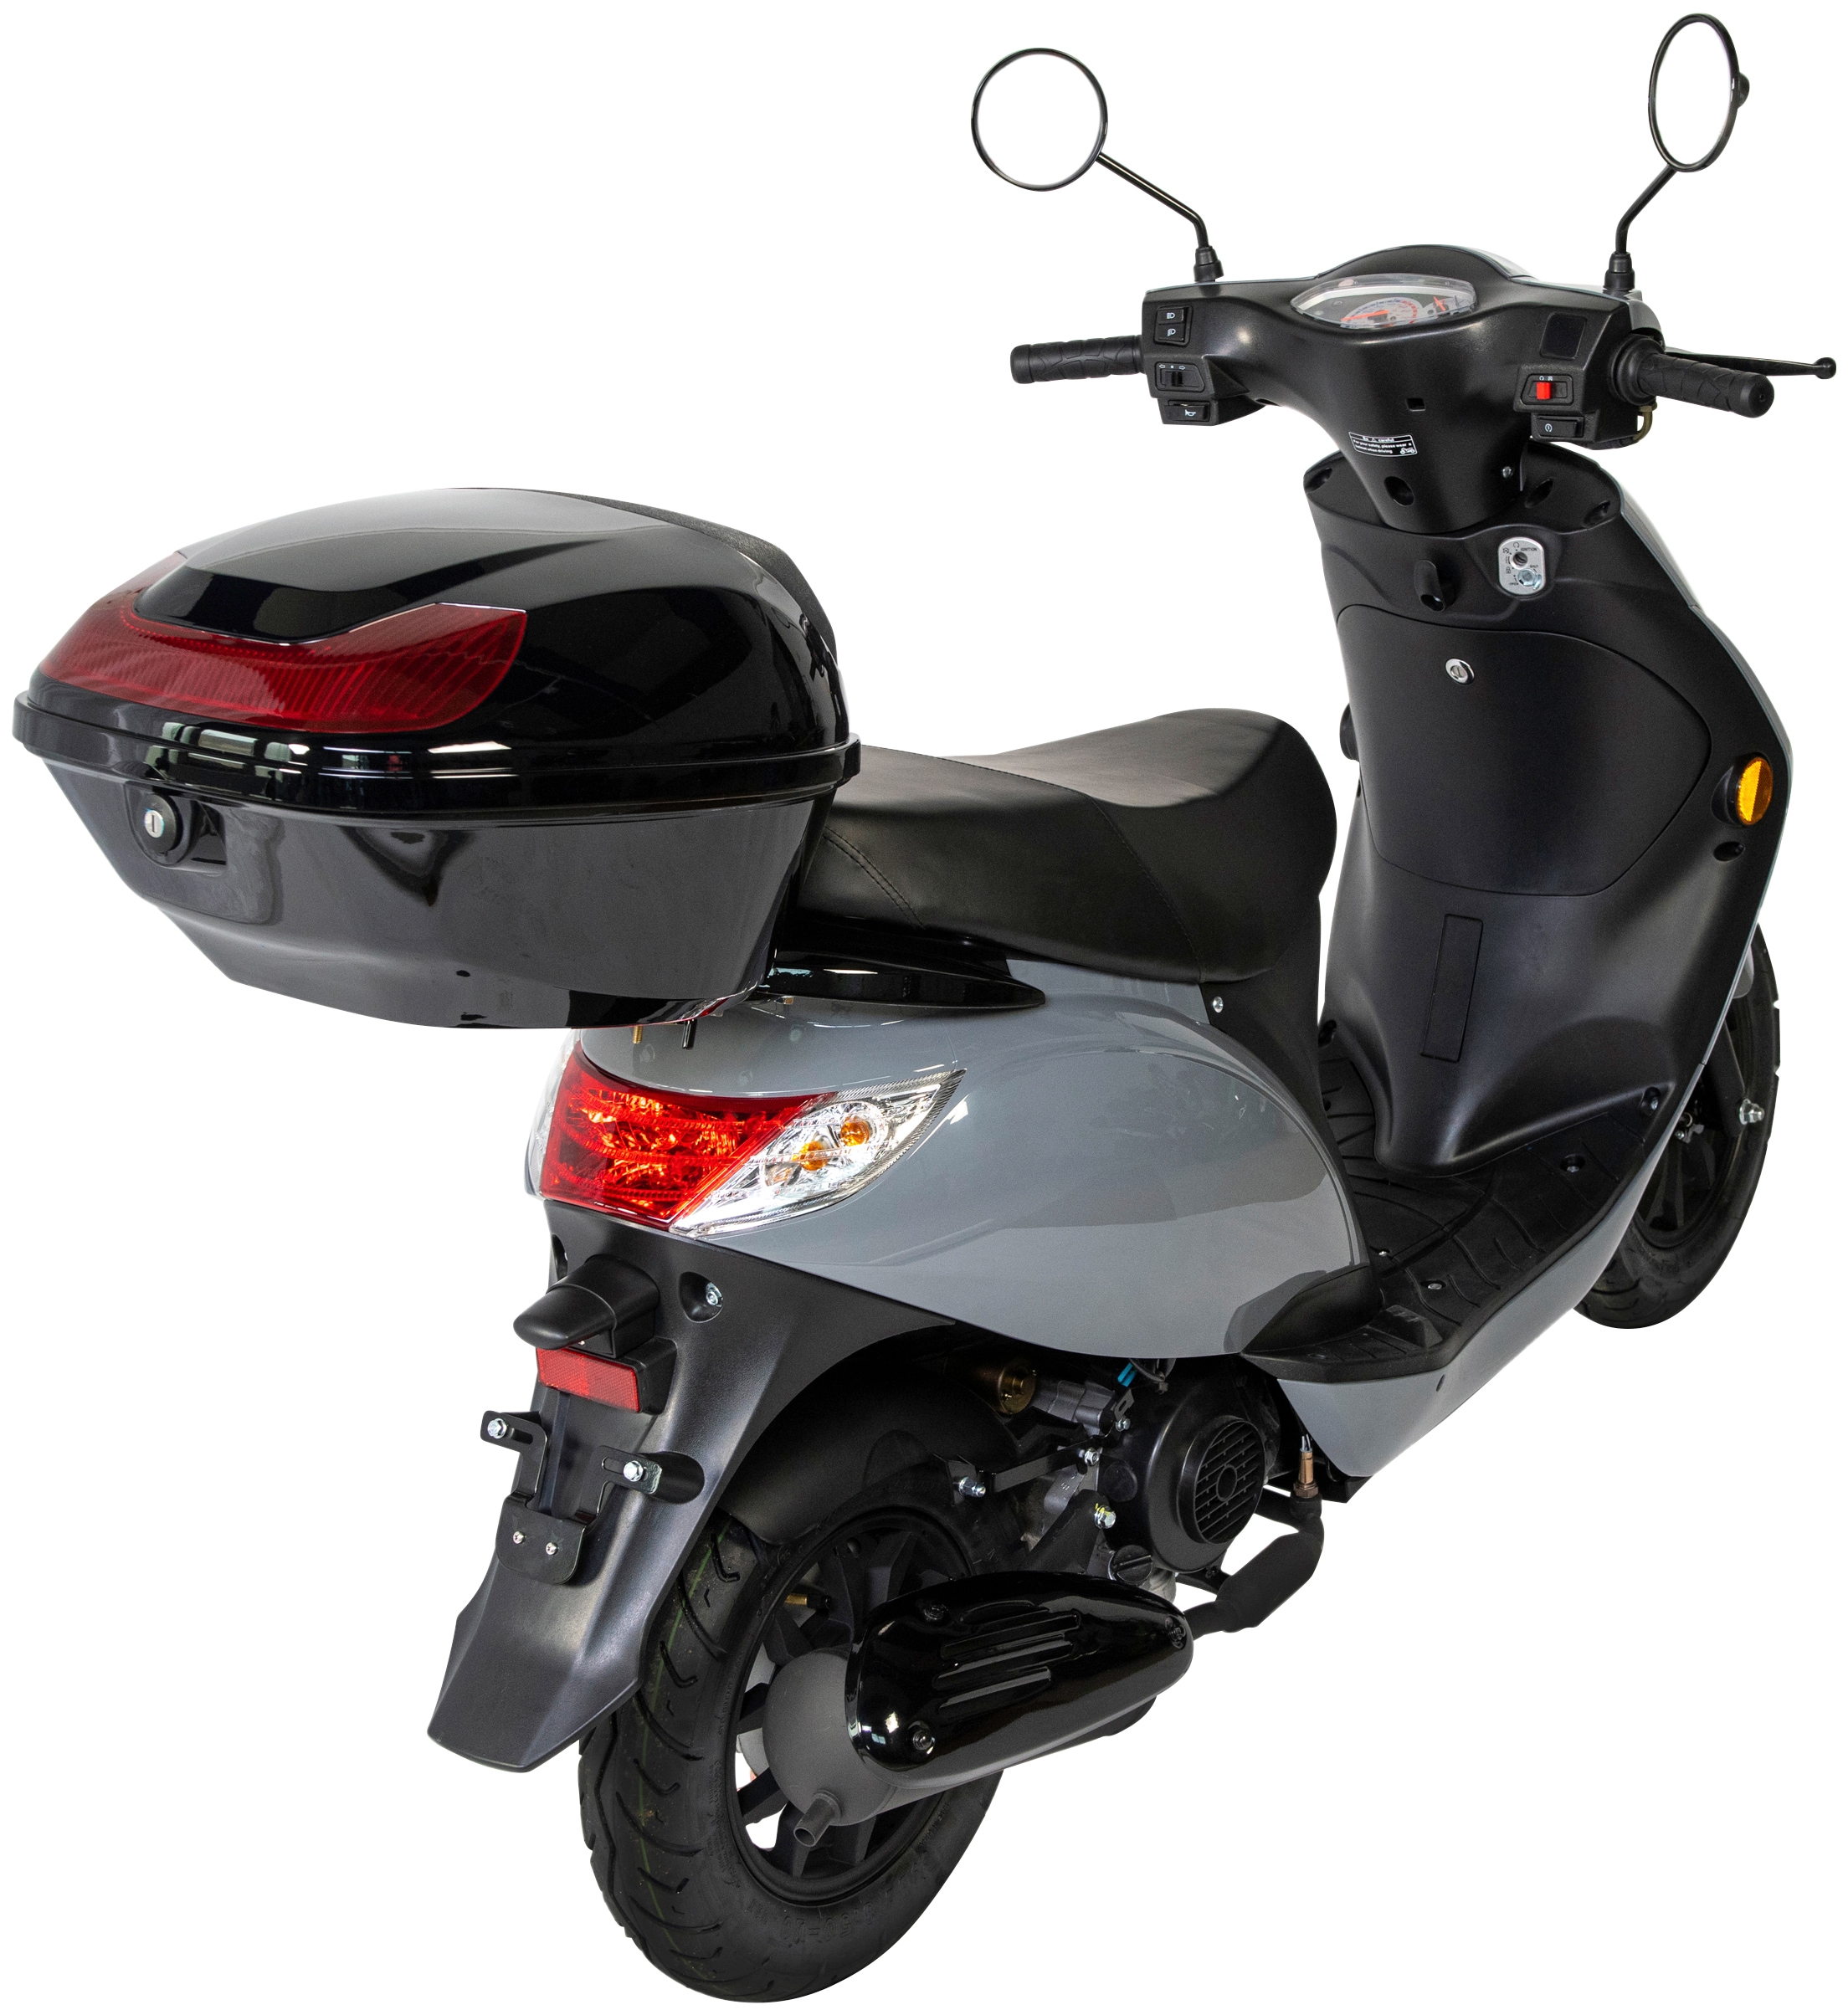 GT UNION Motorroller »Matteo 50-45«, 50 cm³, 45 km/h, Euro 5, 3 PS,  (Komplett-Set, 2 tlg., mit Topcase), inkl. Topcase online kaufen | Motorroller